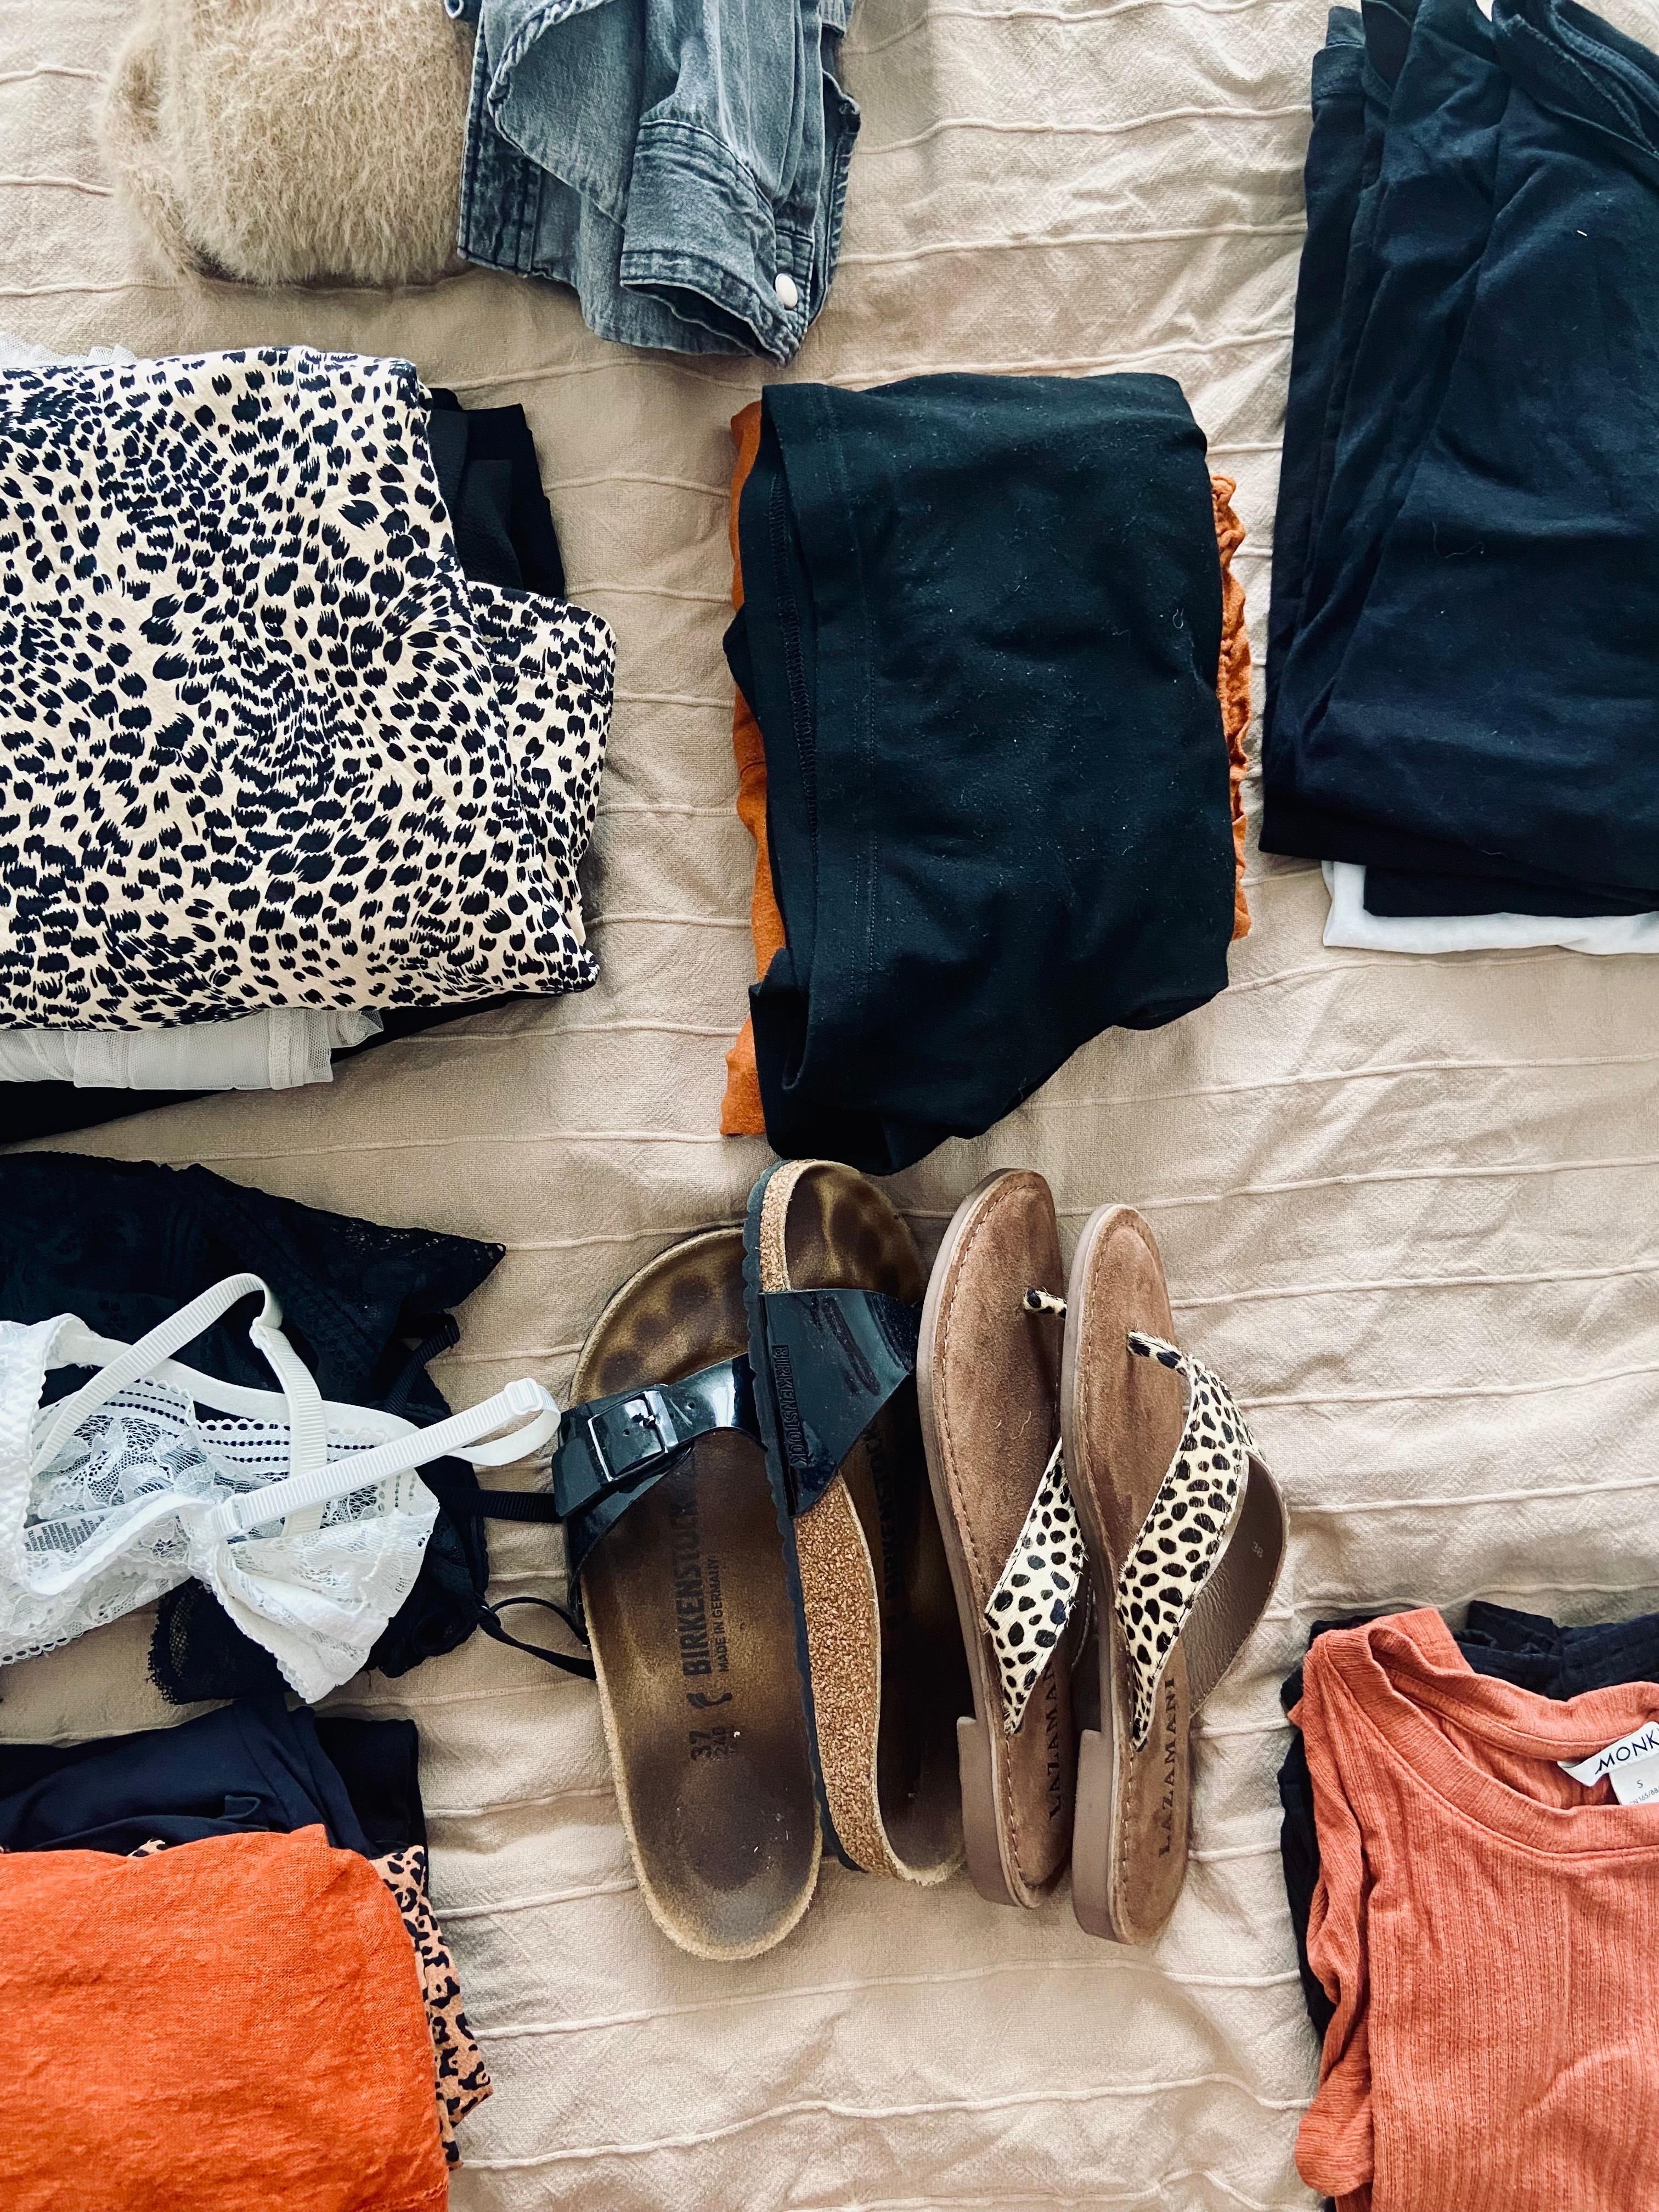 Packing 🤍🧡🖤

#kofferpacken #sommer #summer 